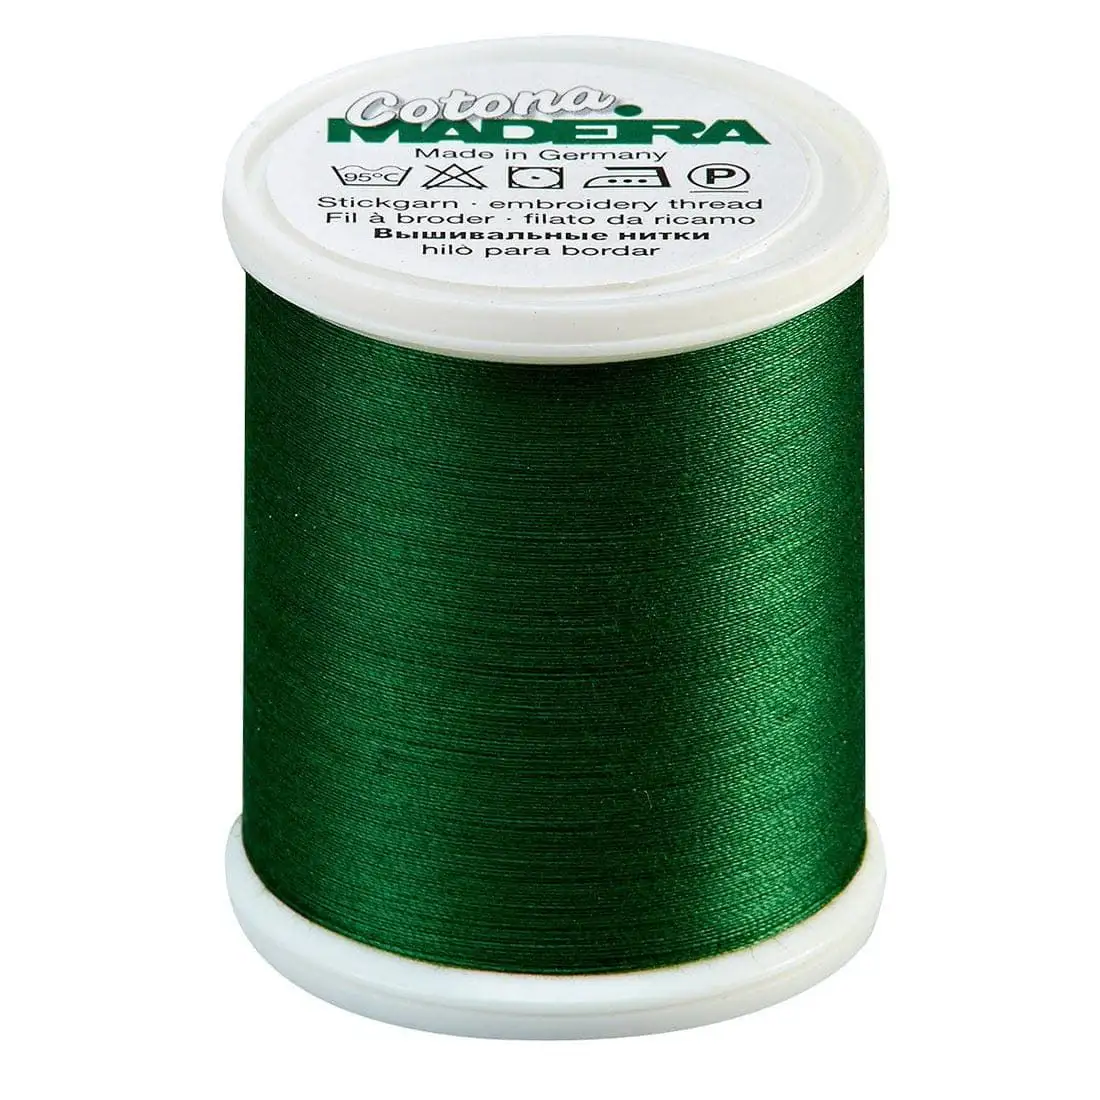 Madeira Cotona 50wt Cotton - 779 Pine Green